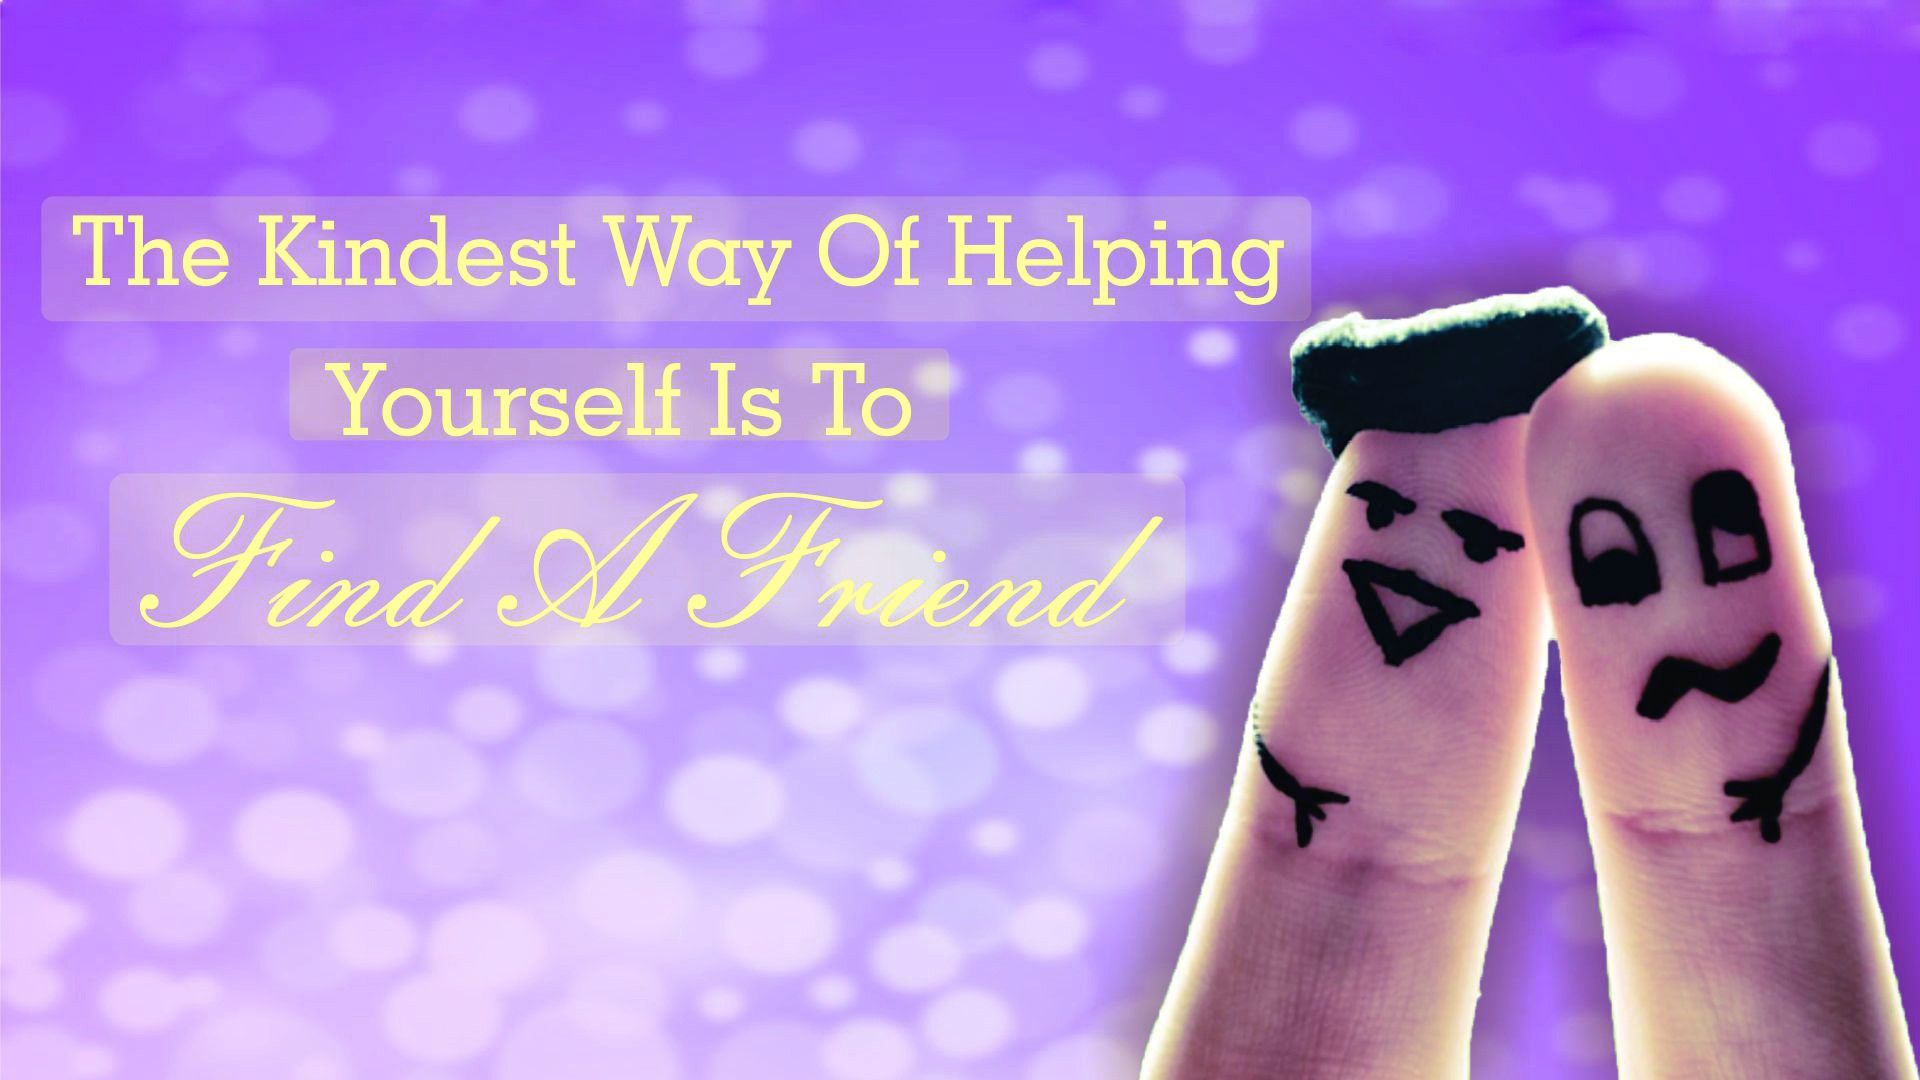 Free download [Best] Friendship Day Whatsapp DP Image Wallpaper